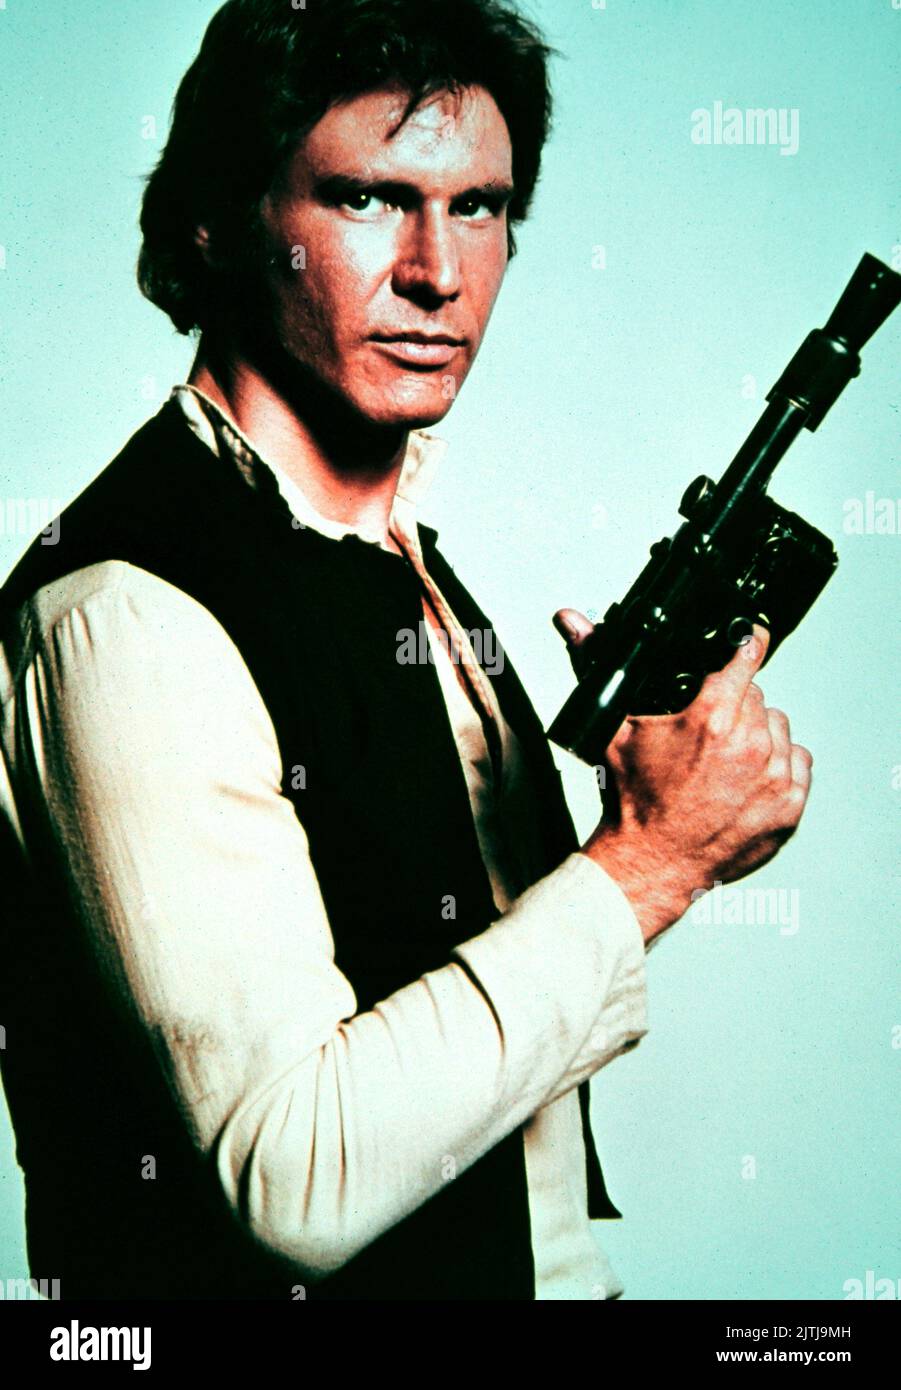 Star Wars, aka Krieg der Sterne, USA 1977, Regie: George Lucas, Charakter: Harrison Ford als Han Solo Stock Photo